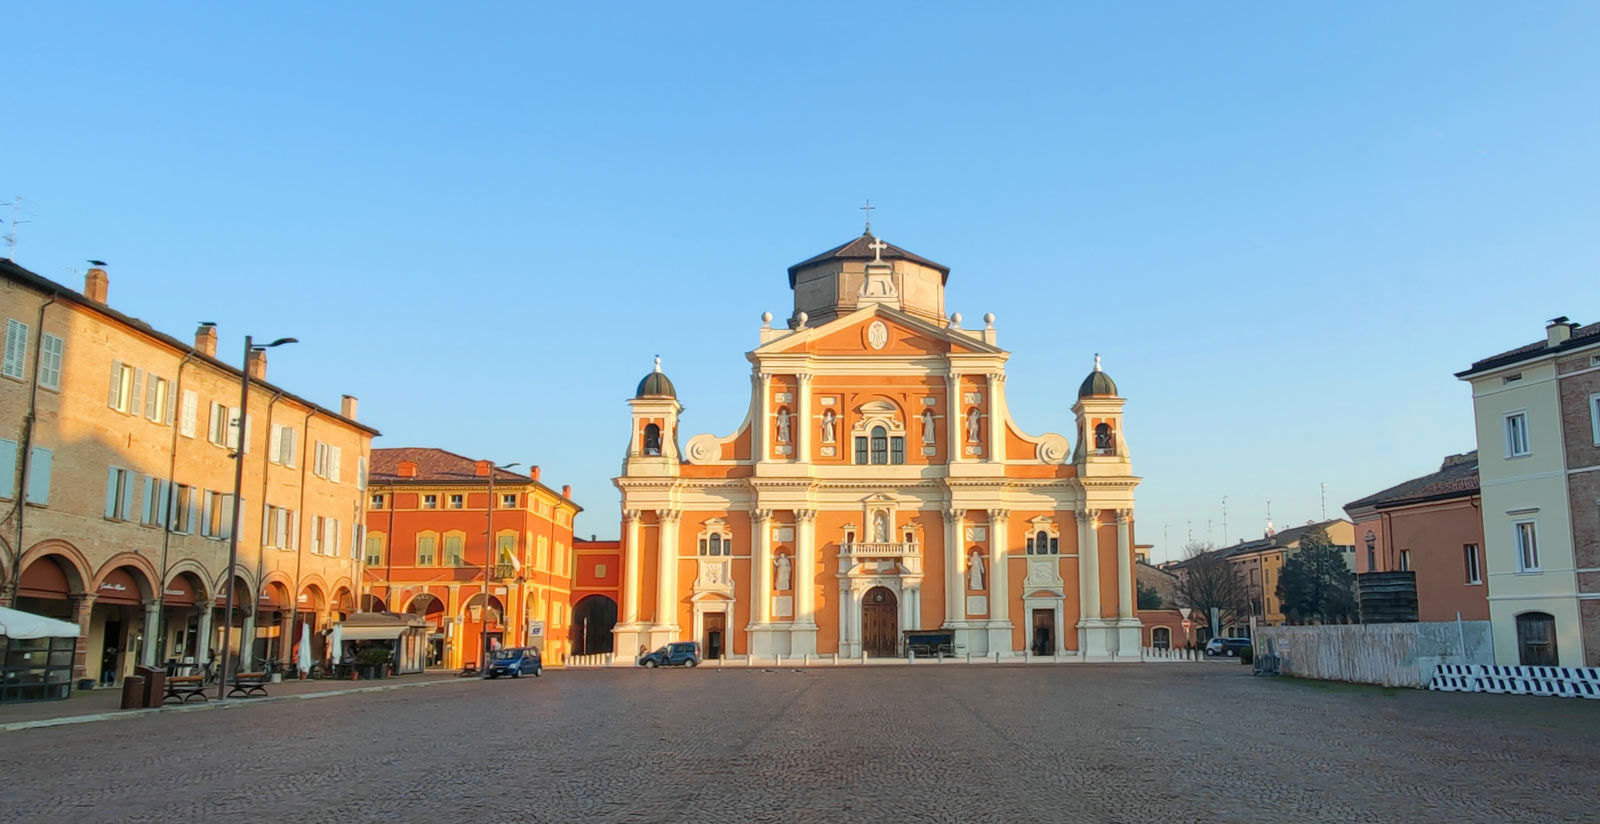 Piazza Martiri and the Cattedrale dell